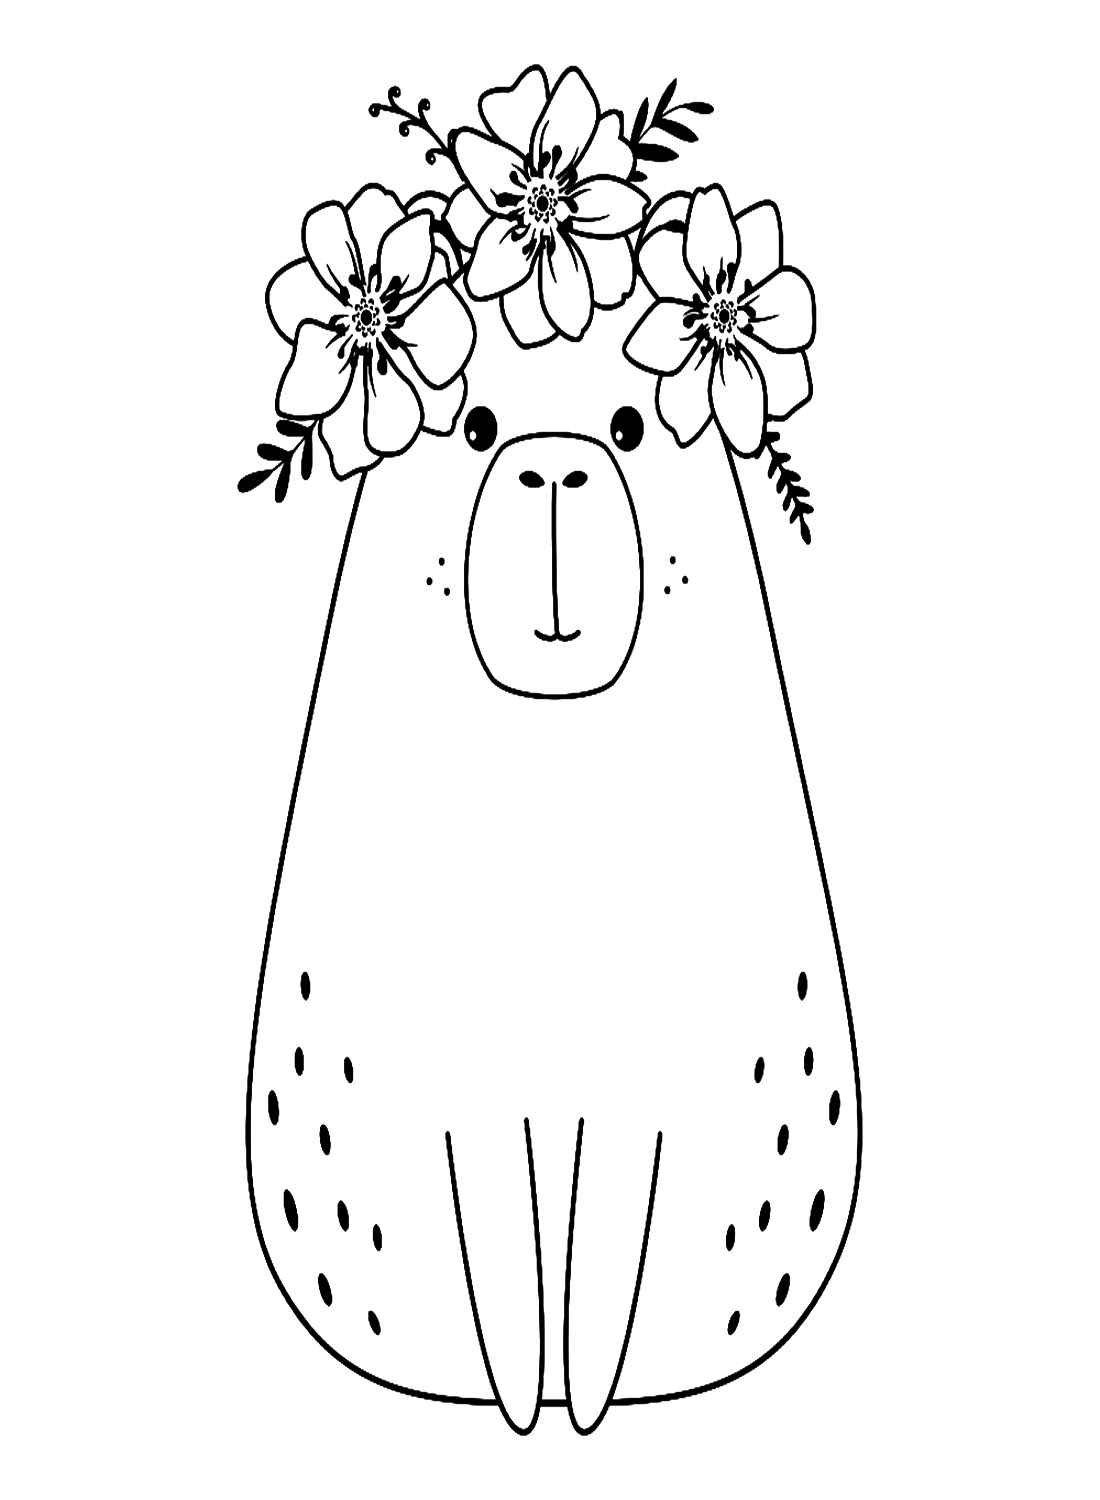 Cute Capybara With Flowers Wreath from Capybara